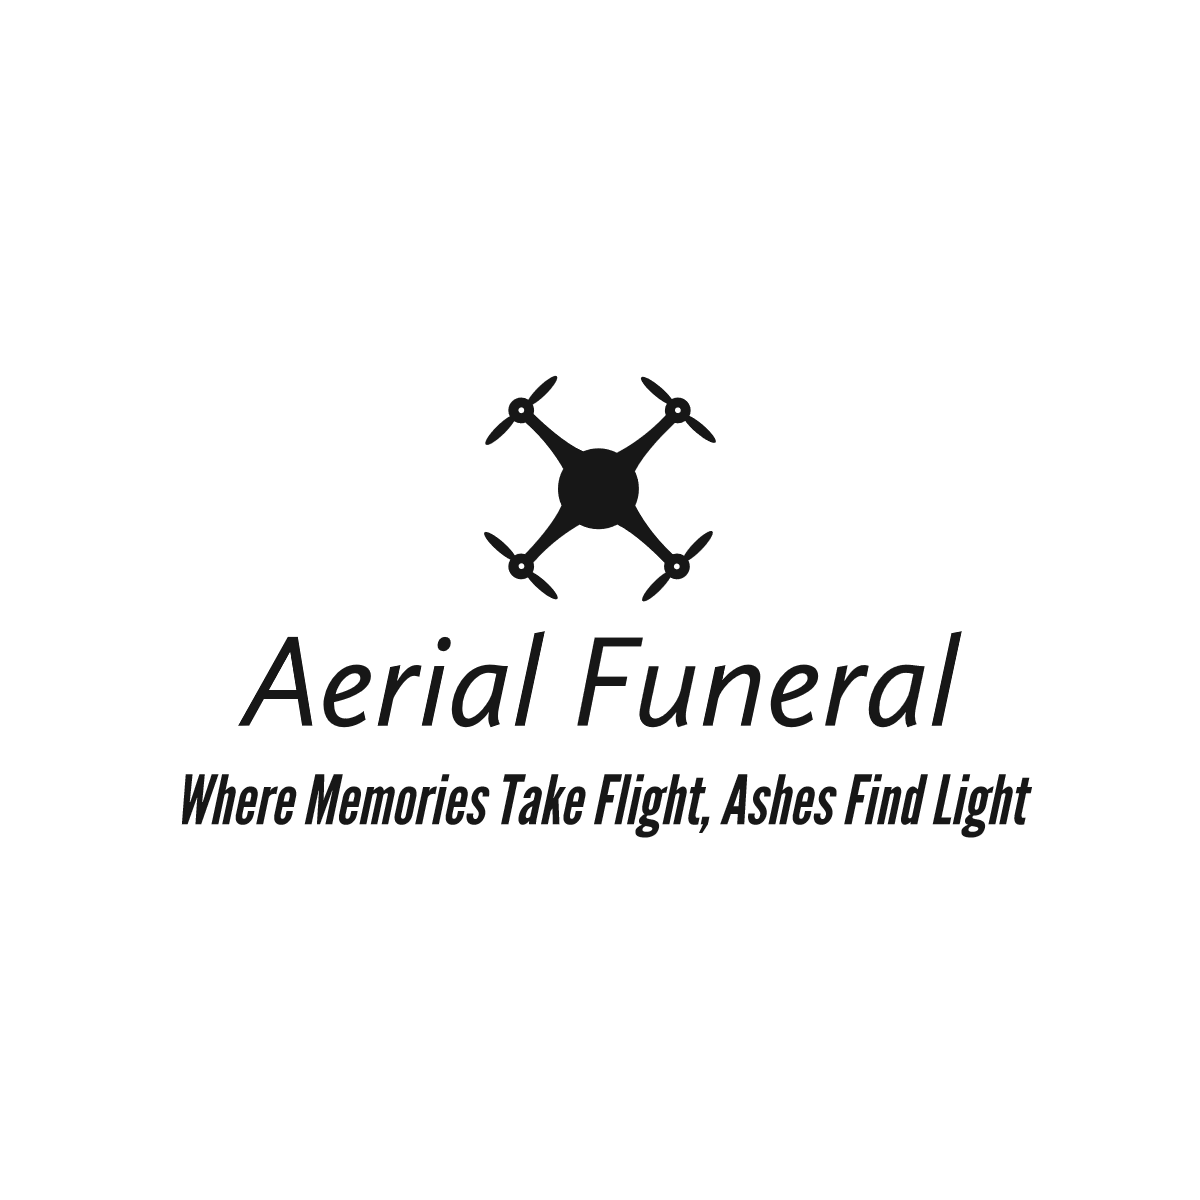 Aerial Funeral